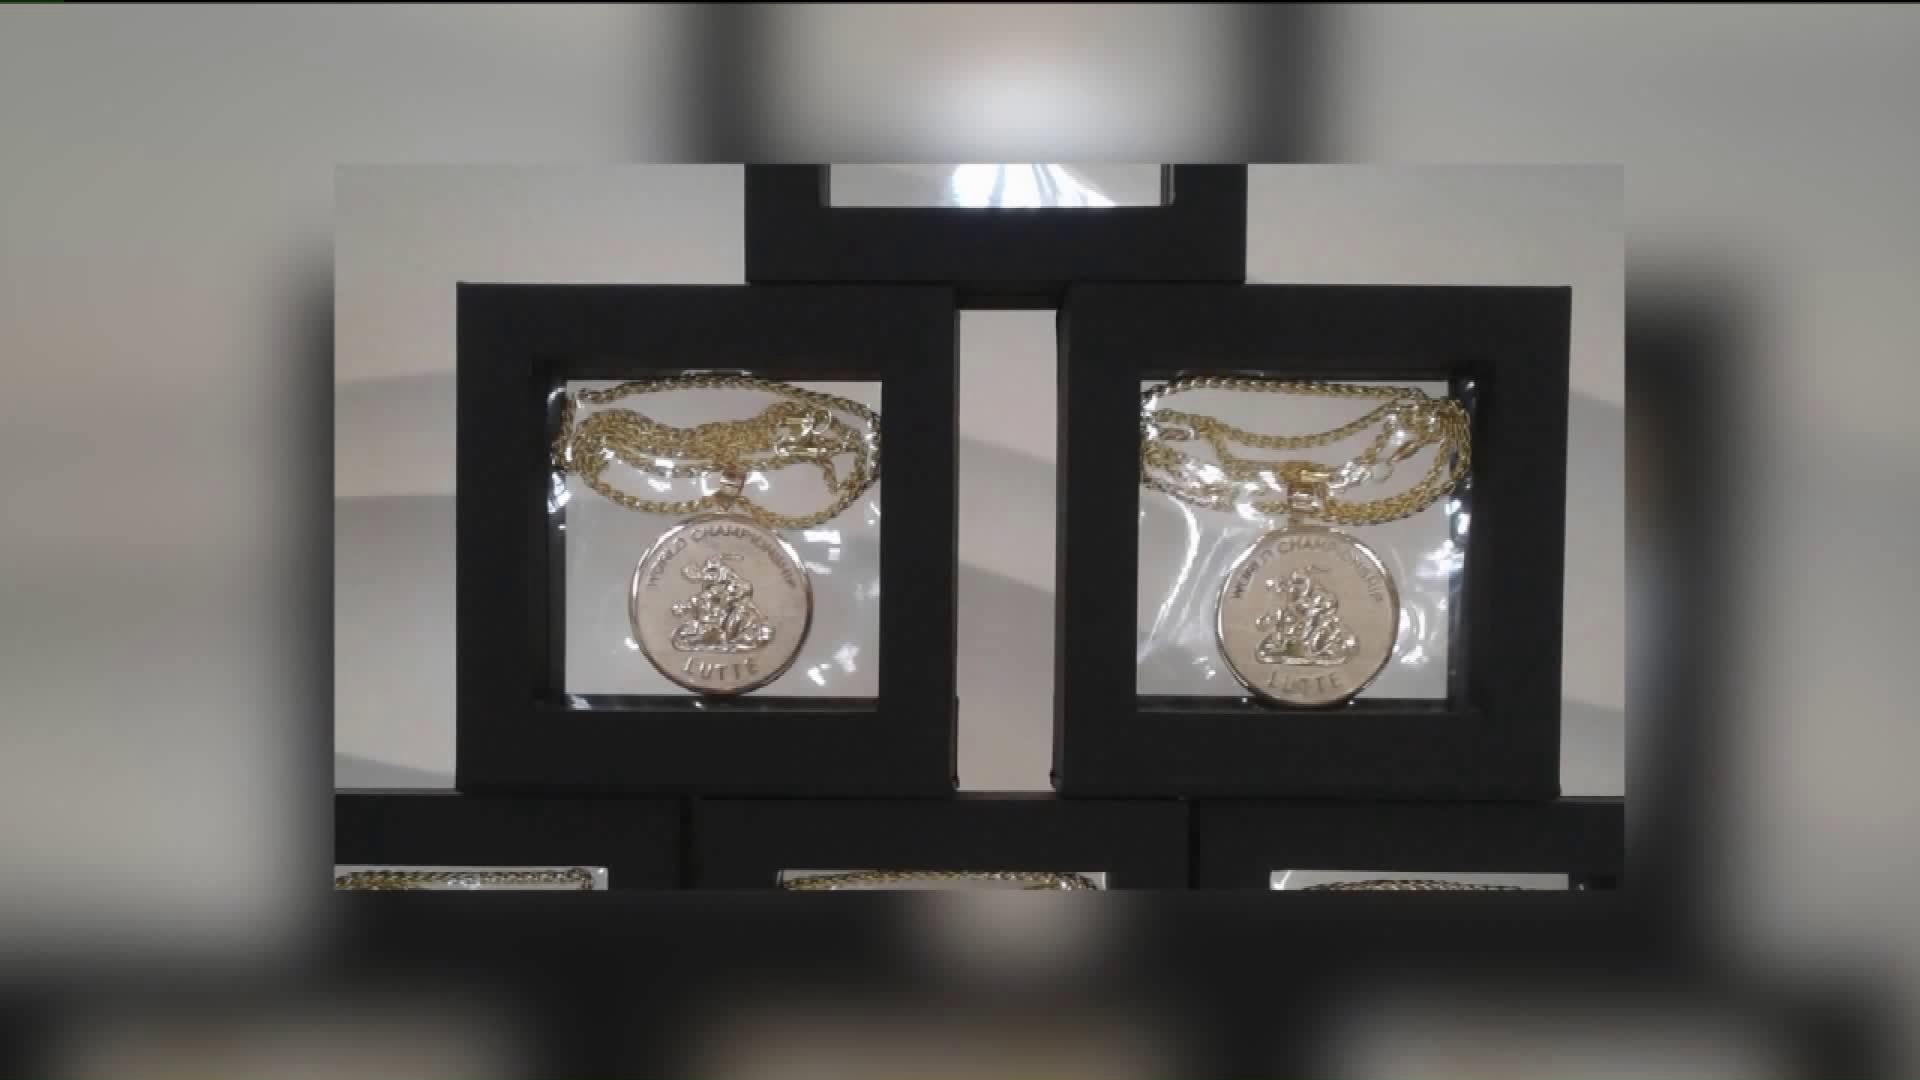 Kingston Jeweler Designs Gold Medal for Champion Wrestlers